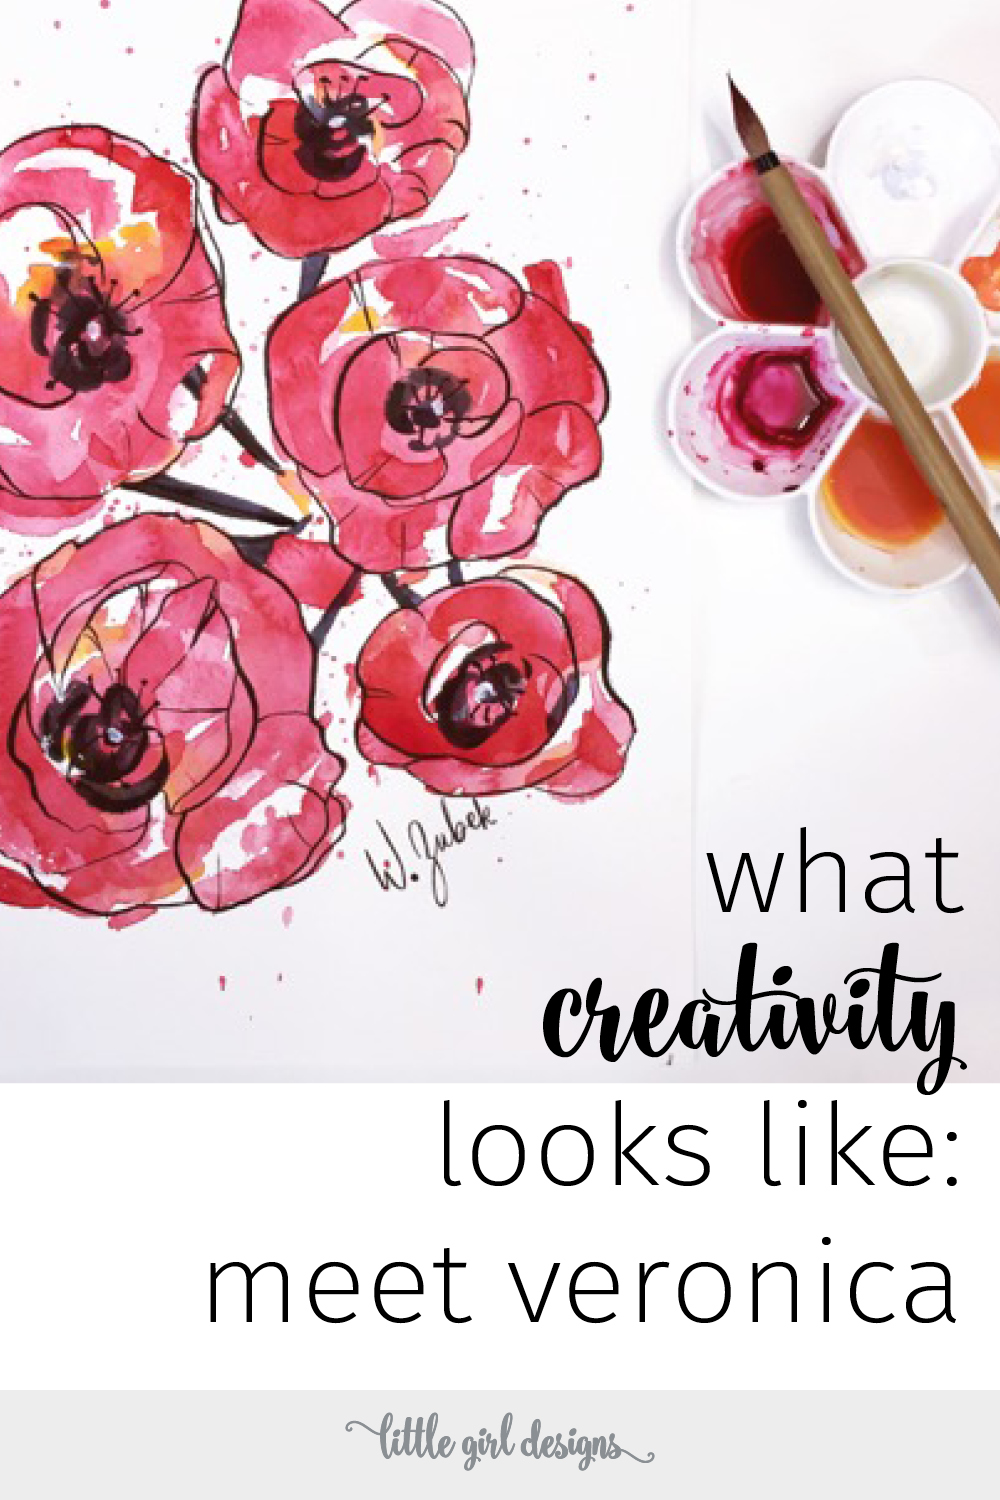 What Creativity Looks Like: Meet Veronica Zubek